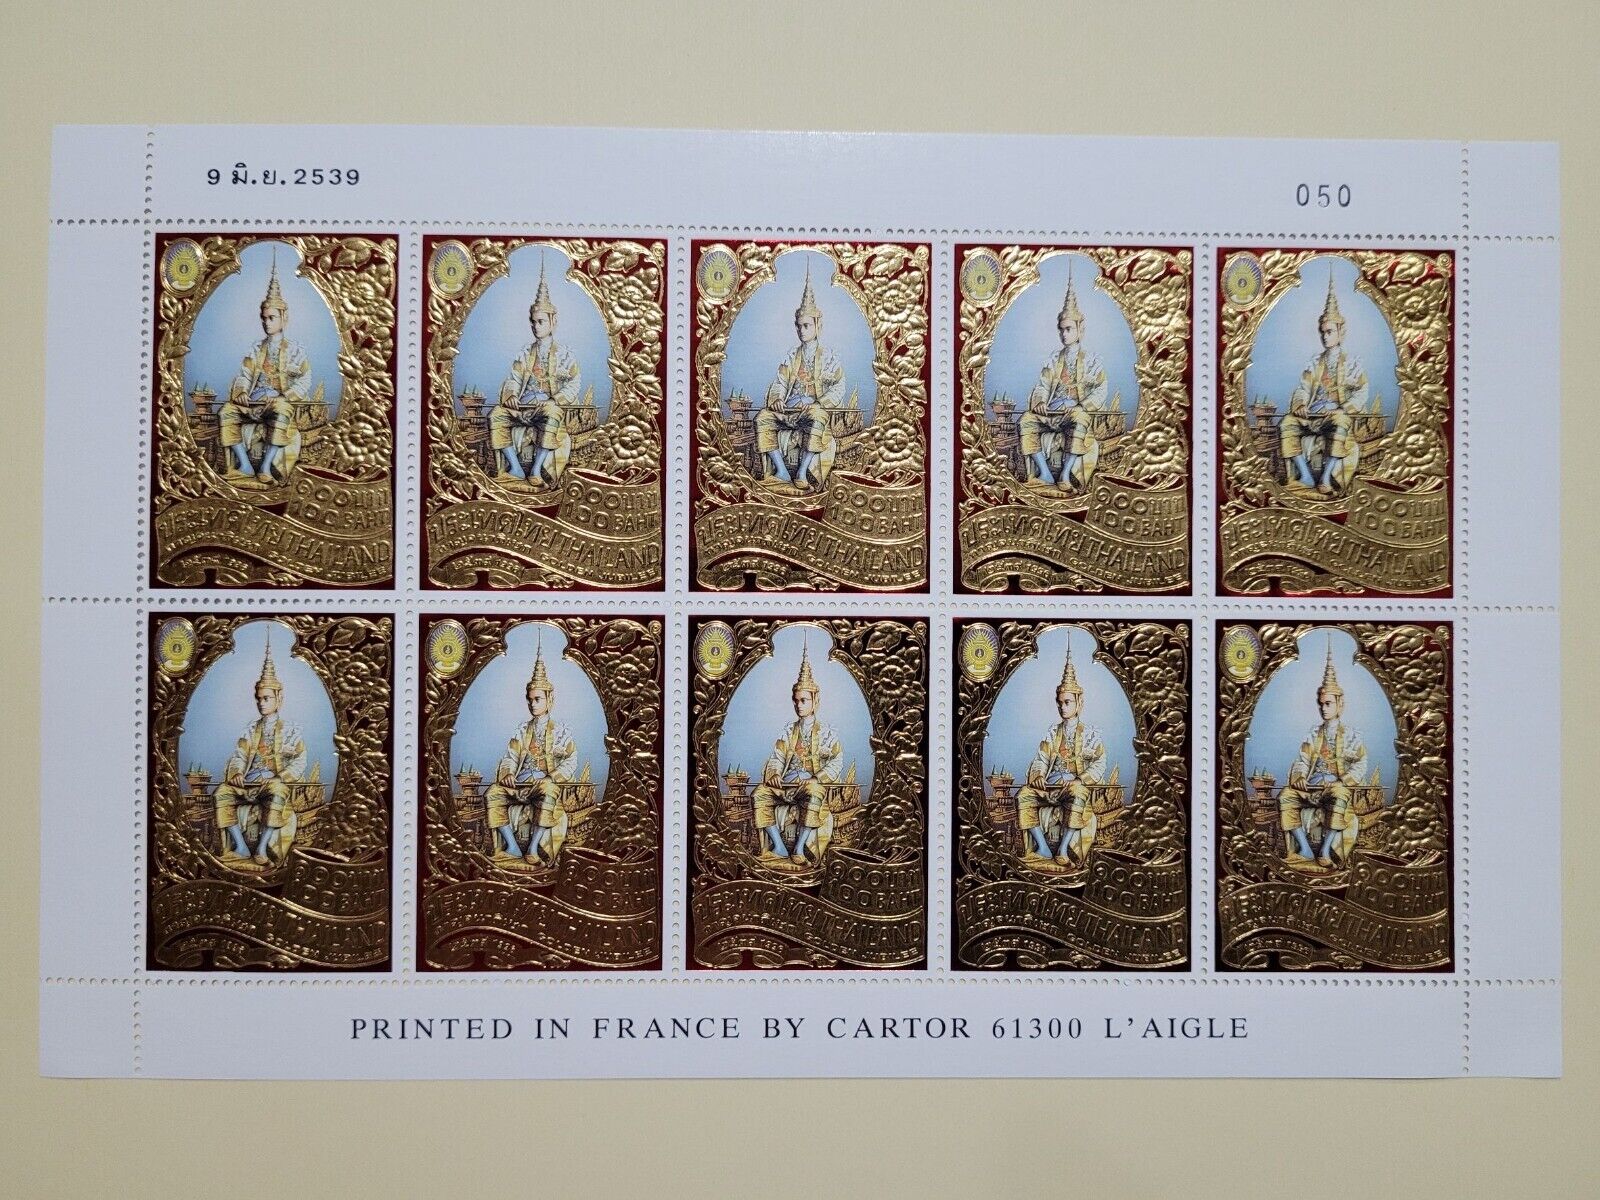 Thai Stamp King Bhumibol 50th anniversary - stamp sheet -gold stamp-thai-siam